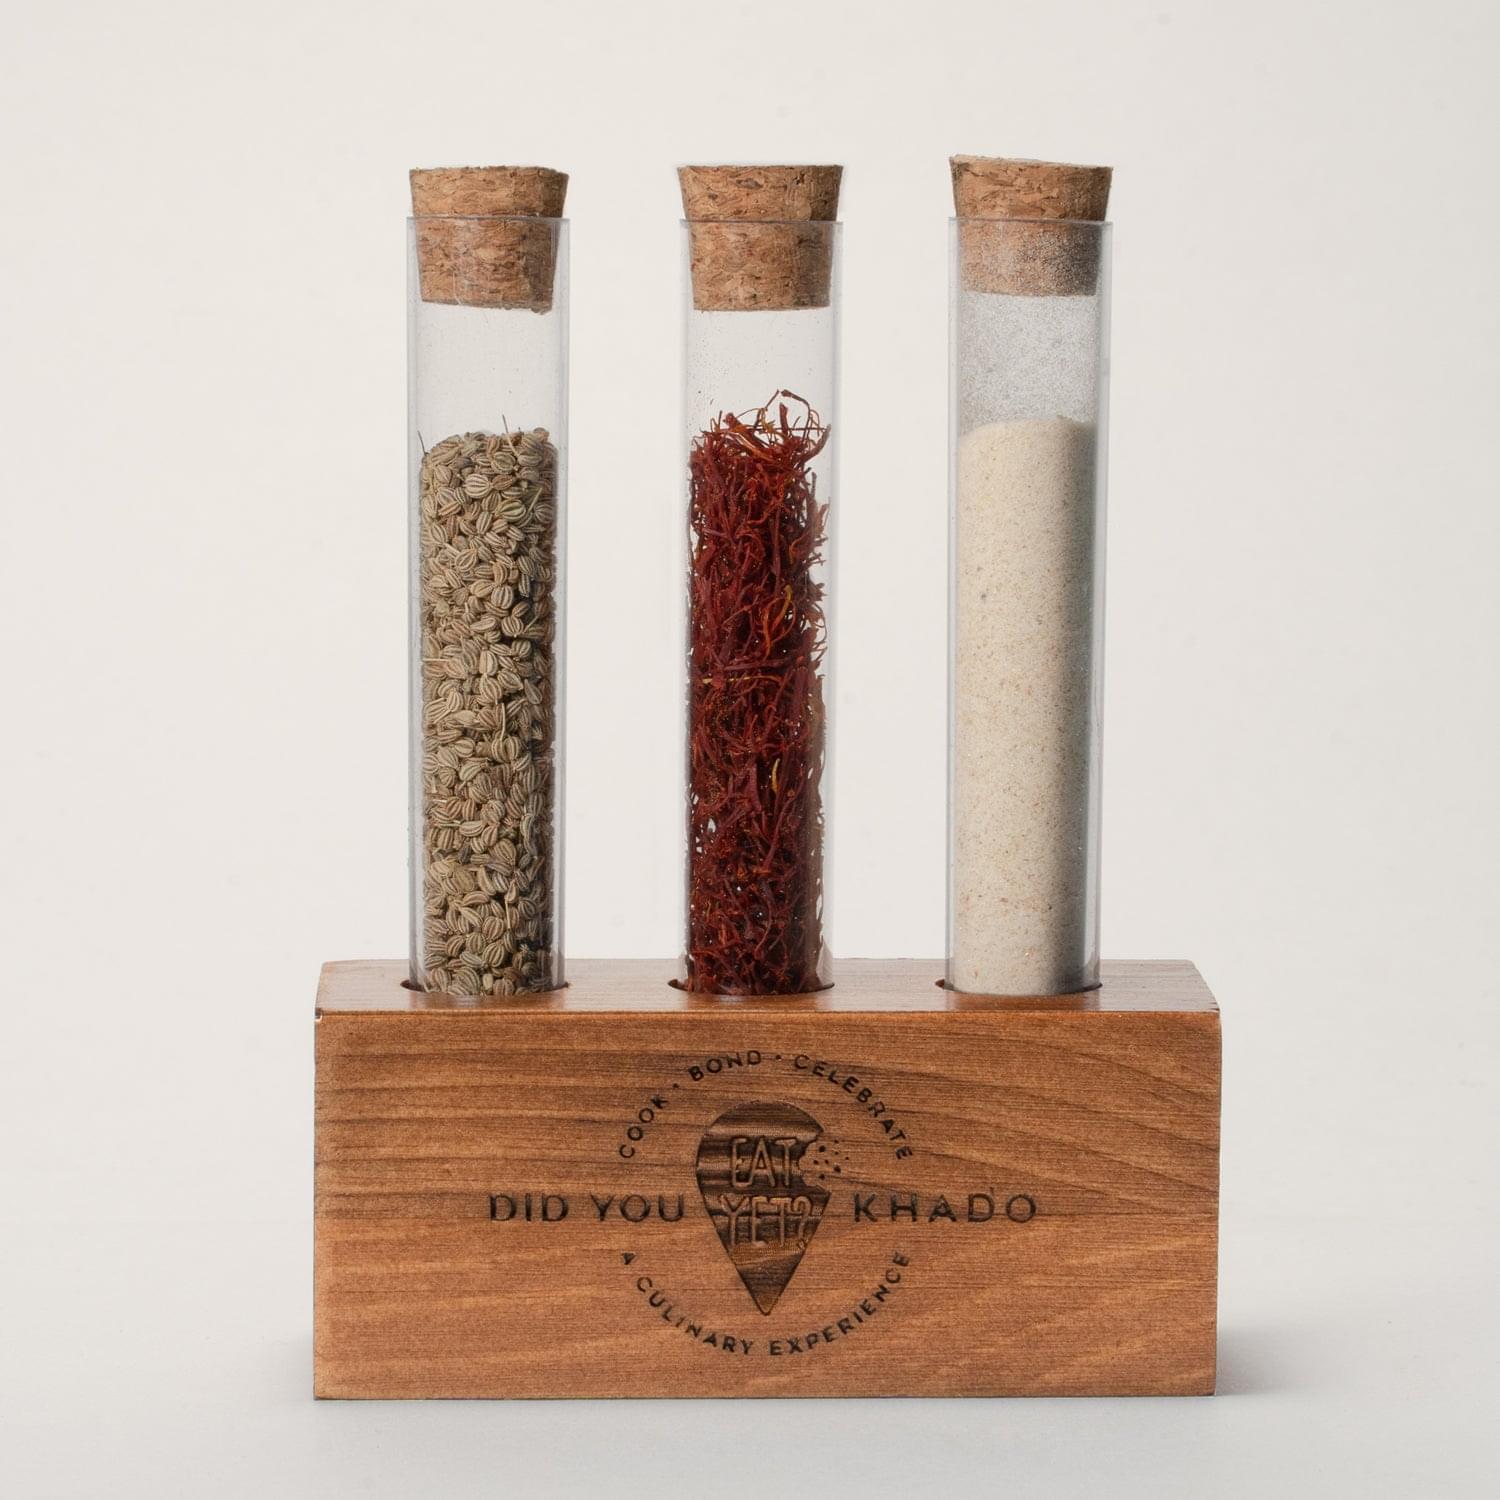 Buy Rare Spices Kit  Shop Rare Spices Kit